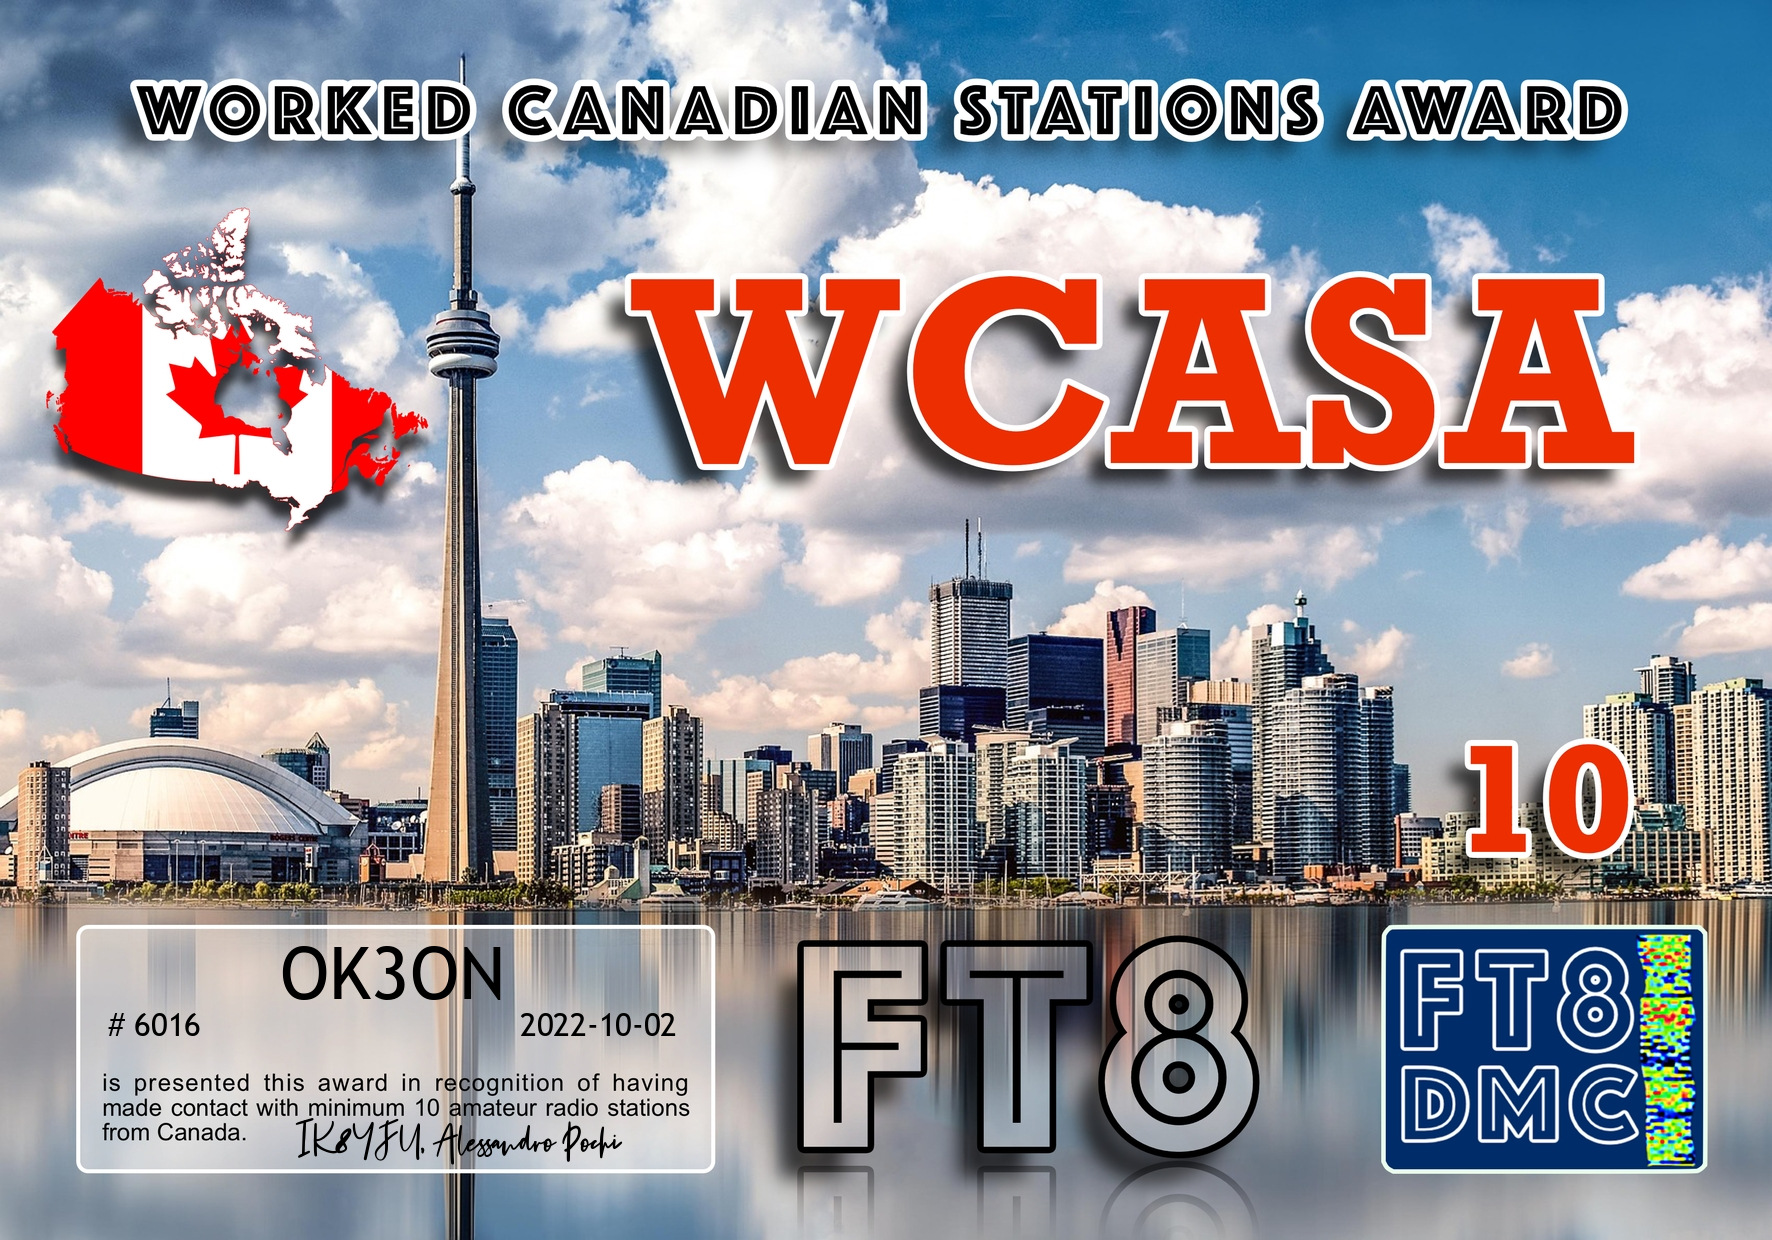 awards/OK3ON-WCASA-III_FT8DMC.jpg